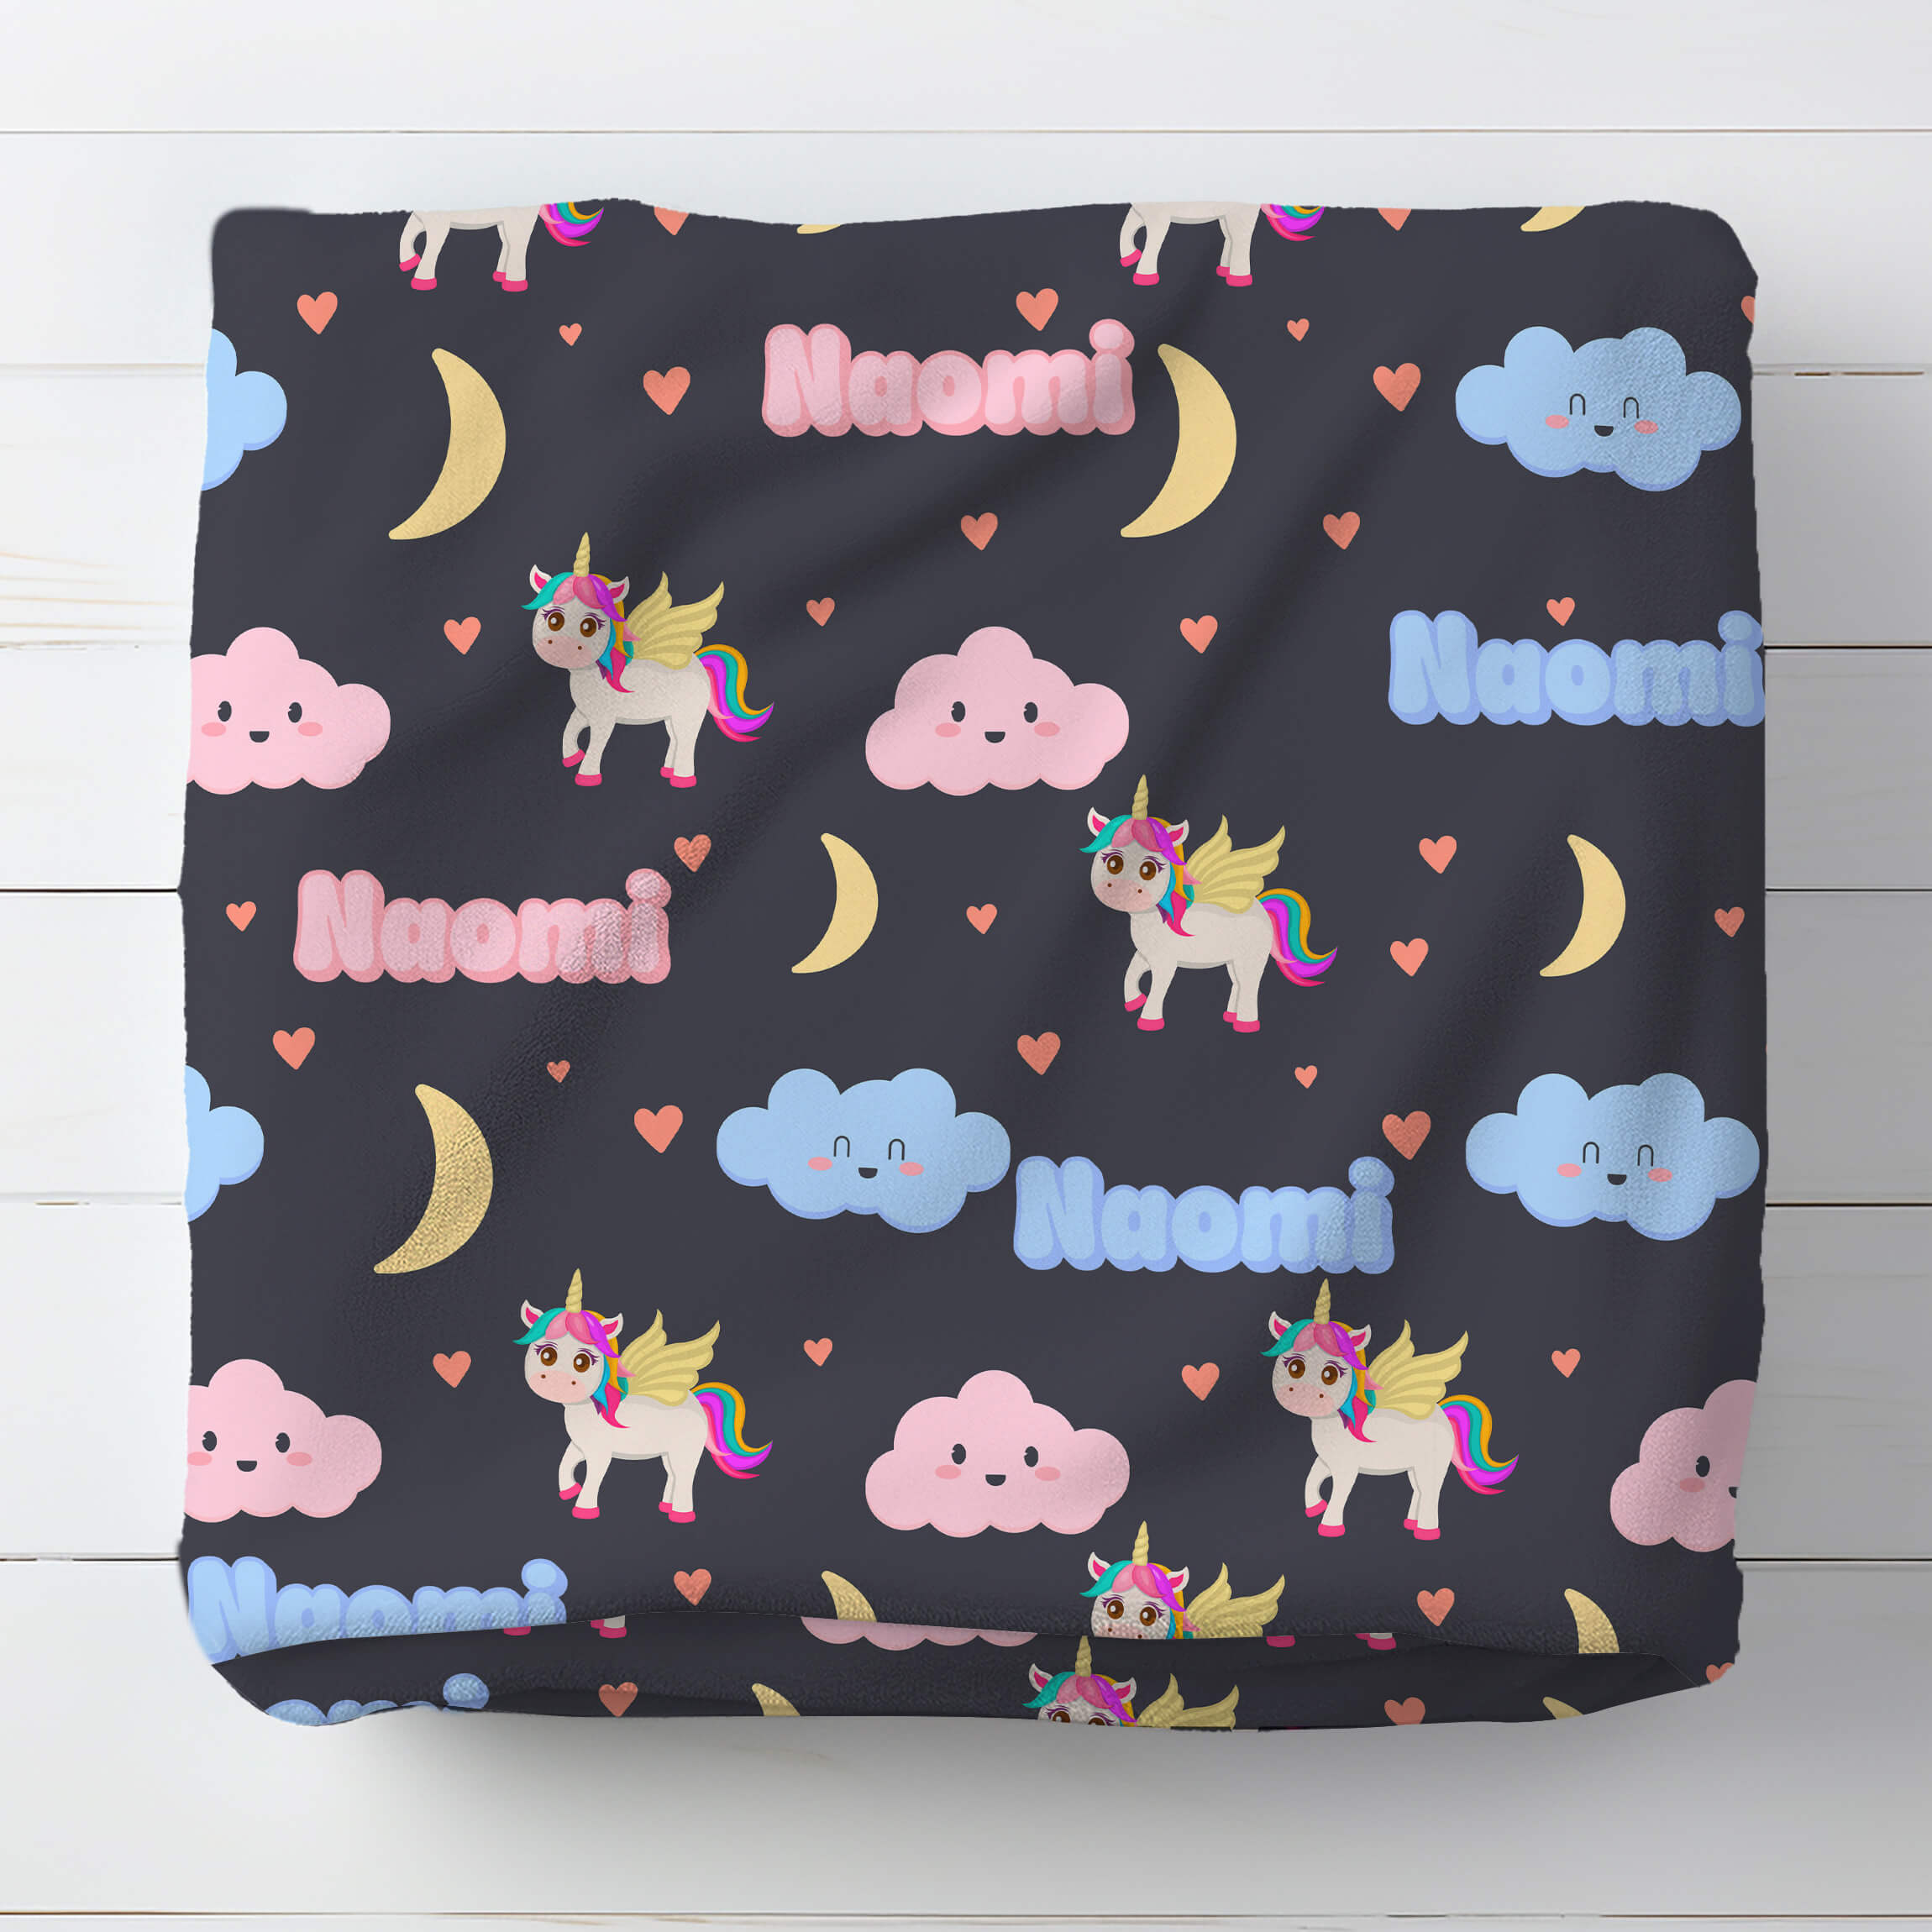 Personalized Name Blanket - Unicorn Moon